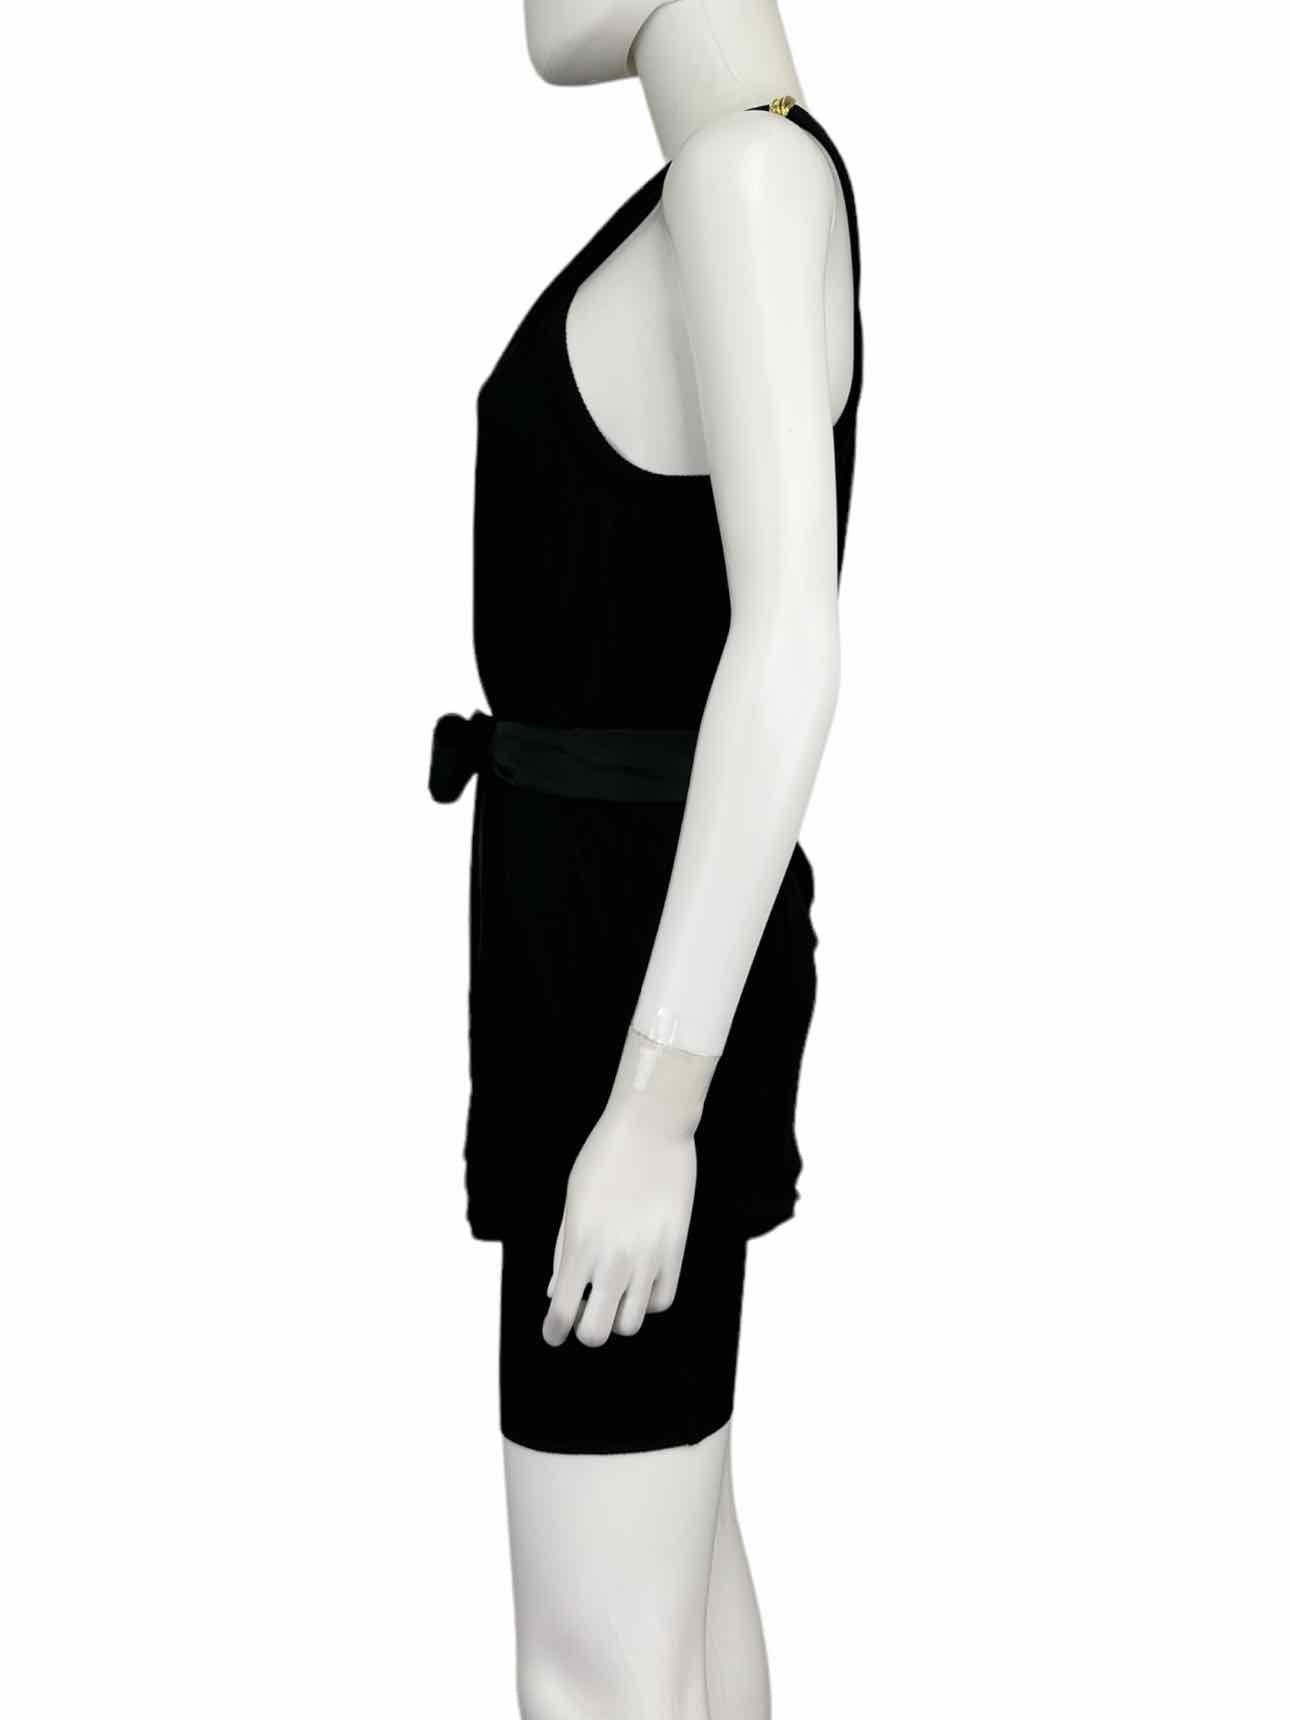 Roberto Cavalli Black Halter Cocktail Dress Size S